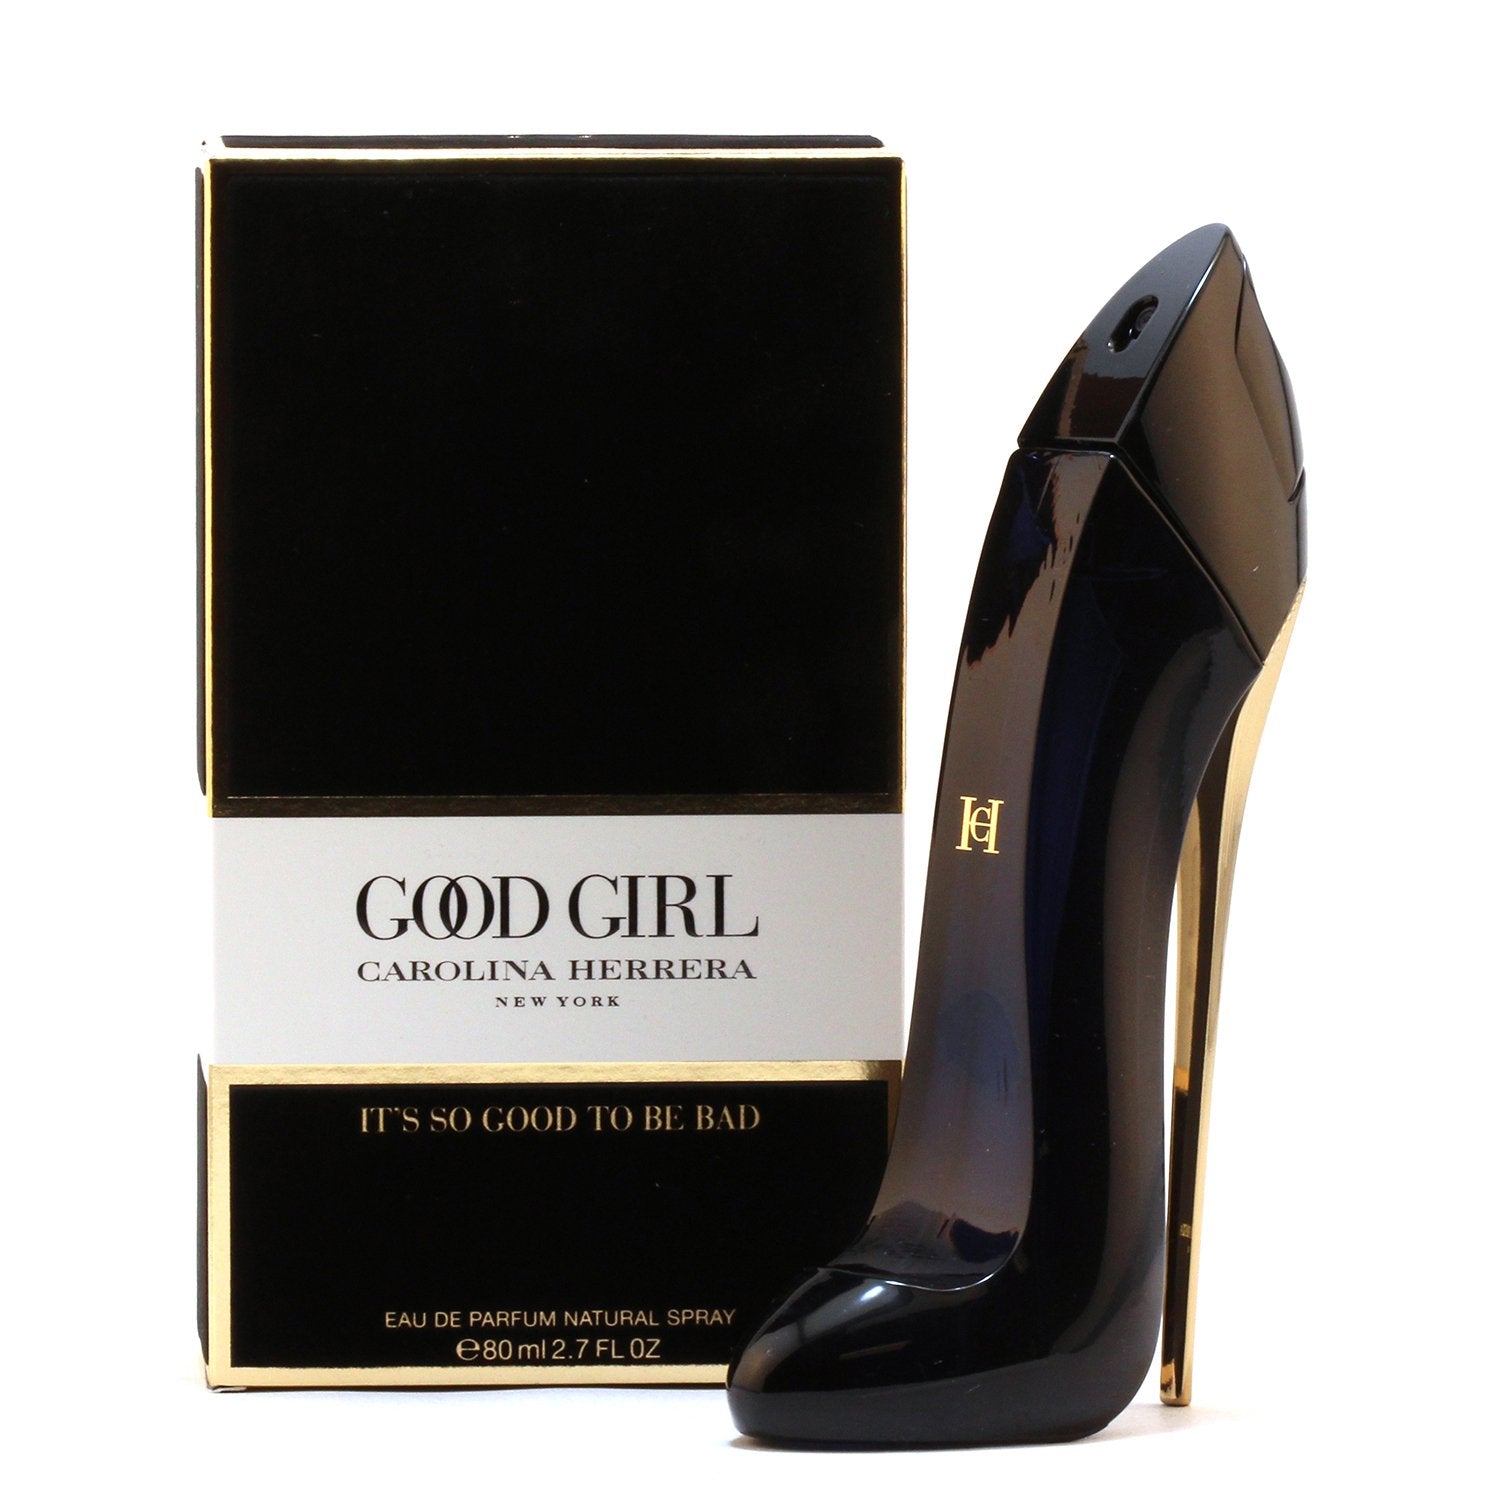 Perfume - GOOD GIRL FOR WOMEN BY CAROLINA HERRERA - EAU DE PARFUM SPRAY